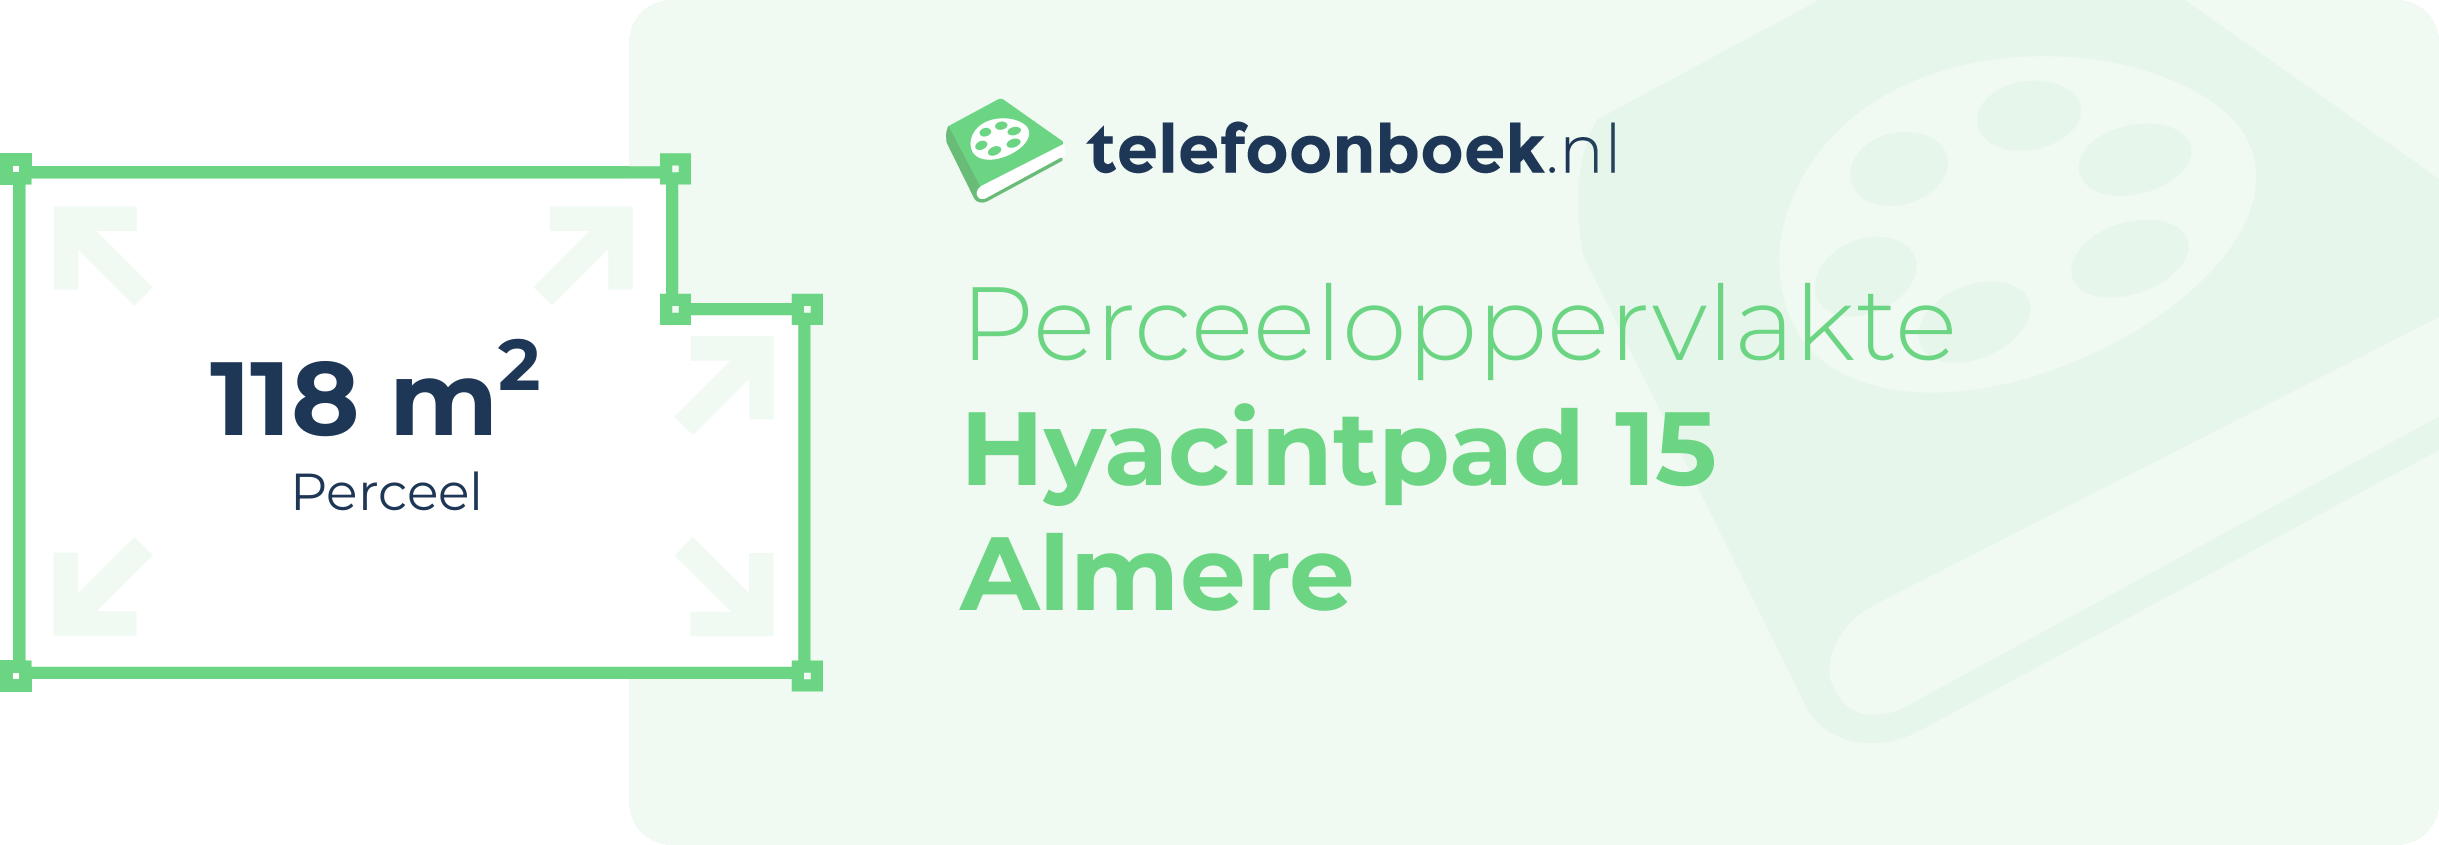 Perceeloppervlakte Hyacintpad 15 Almere